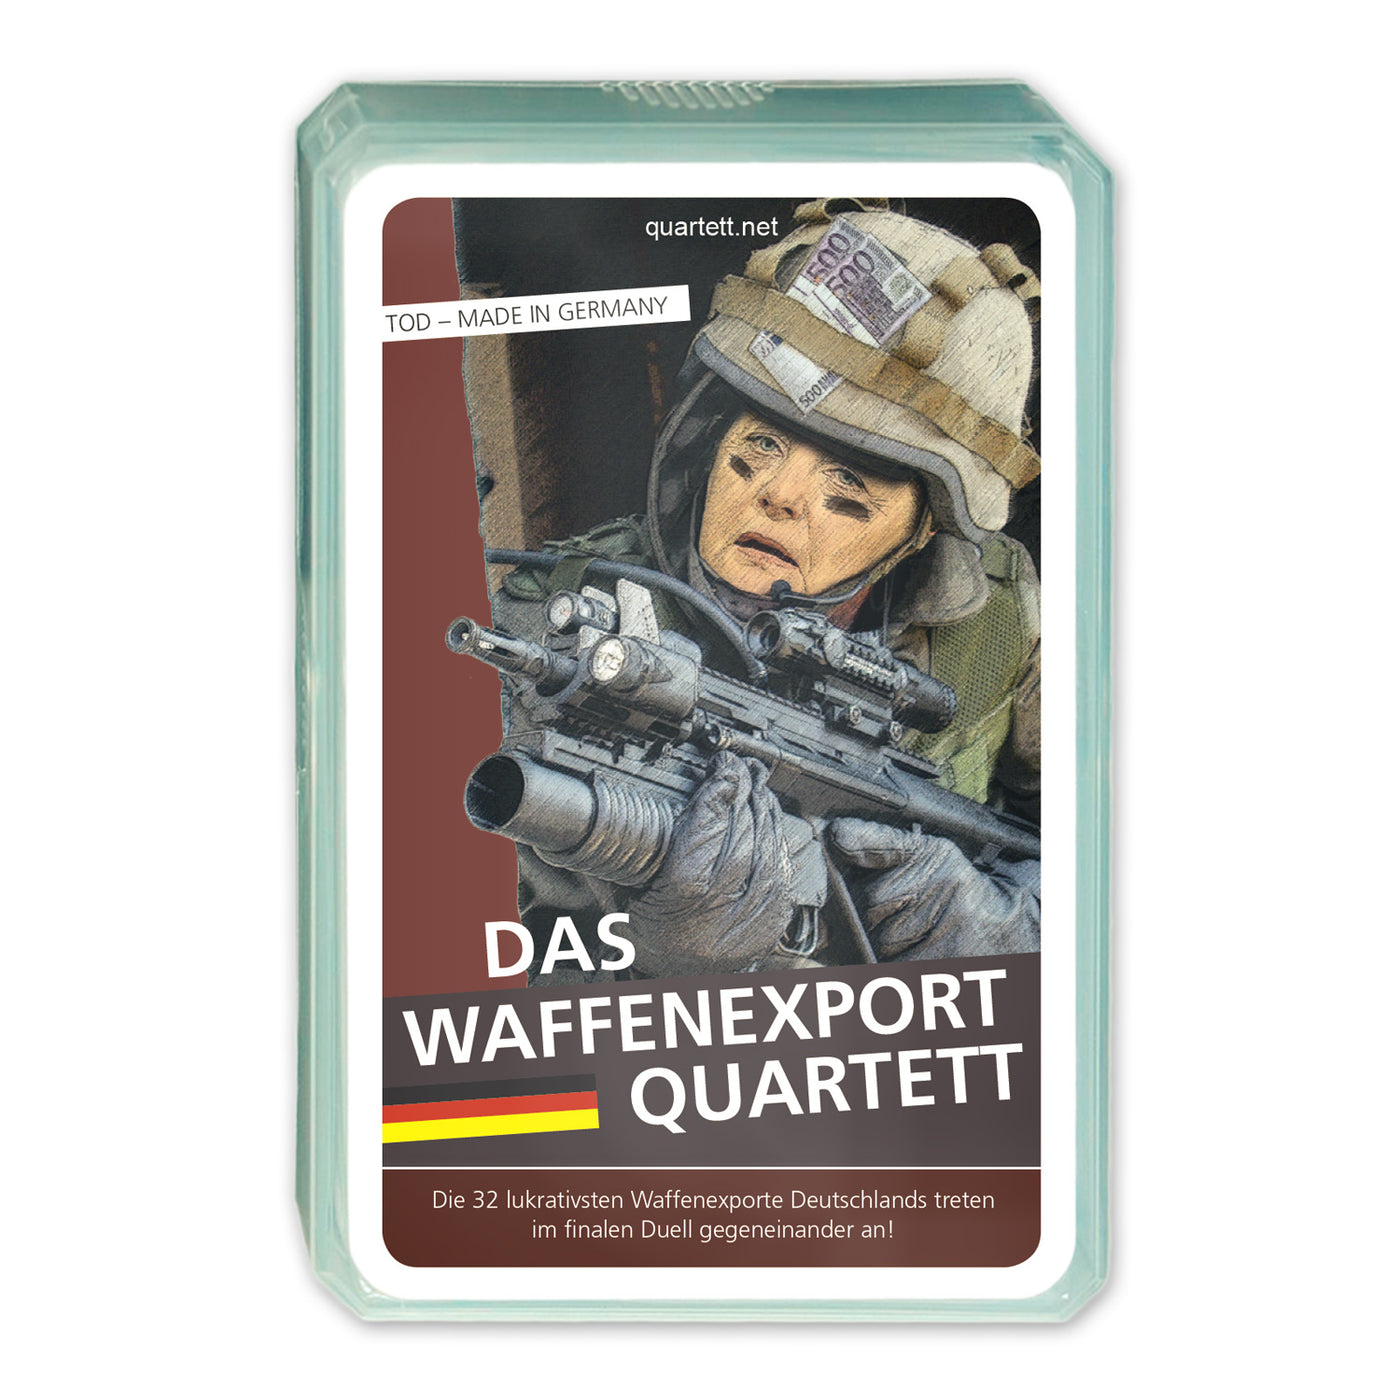 Waffenexport Quartett